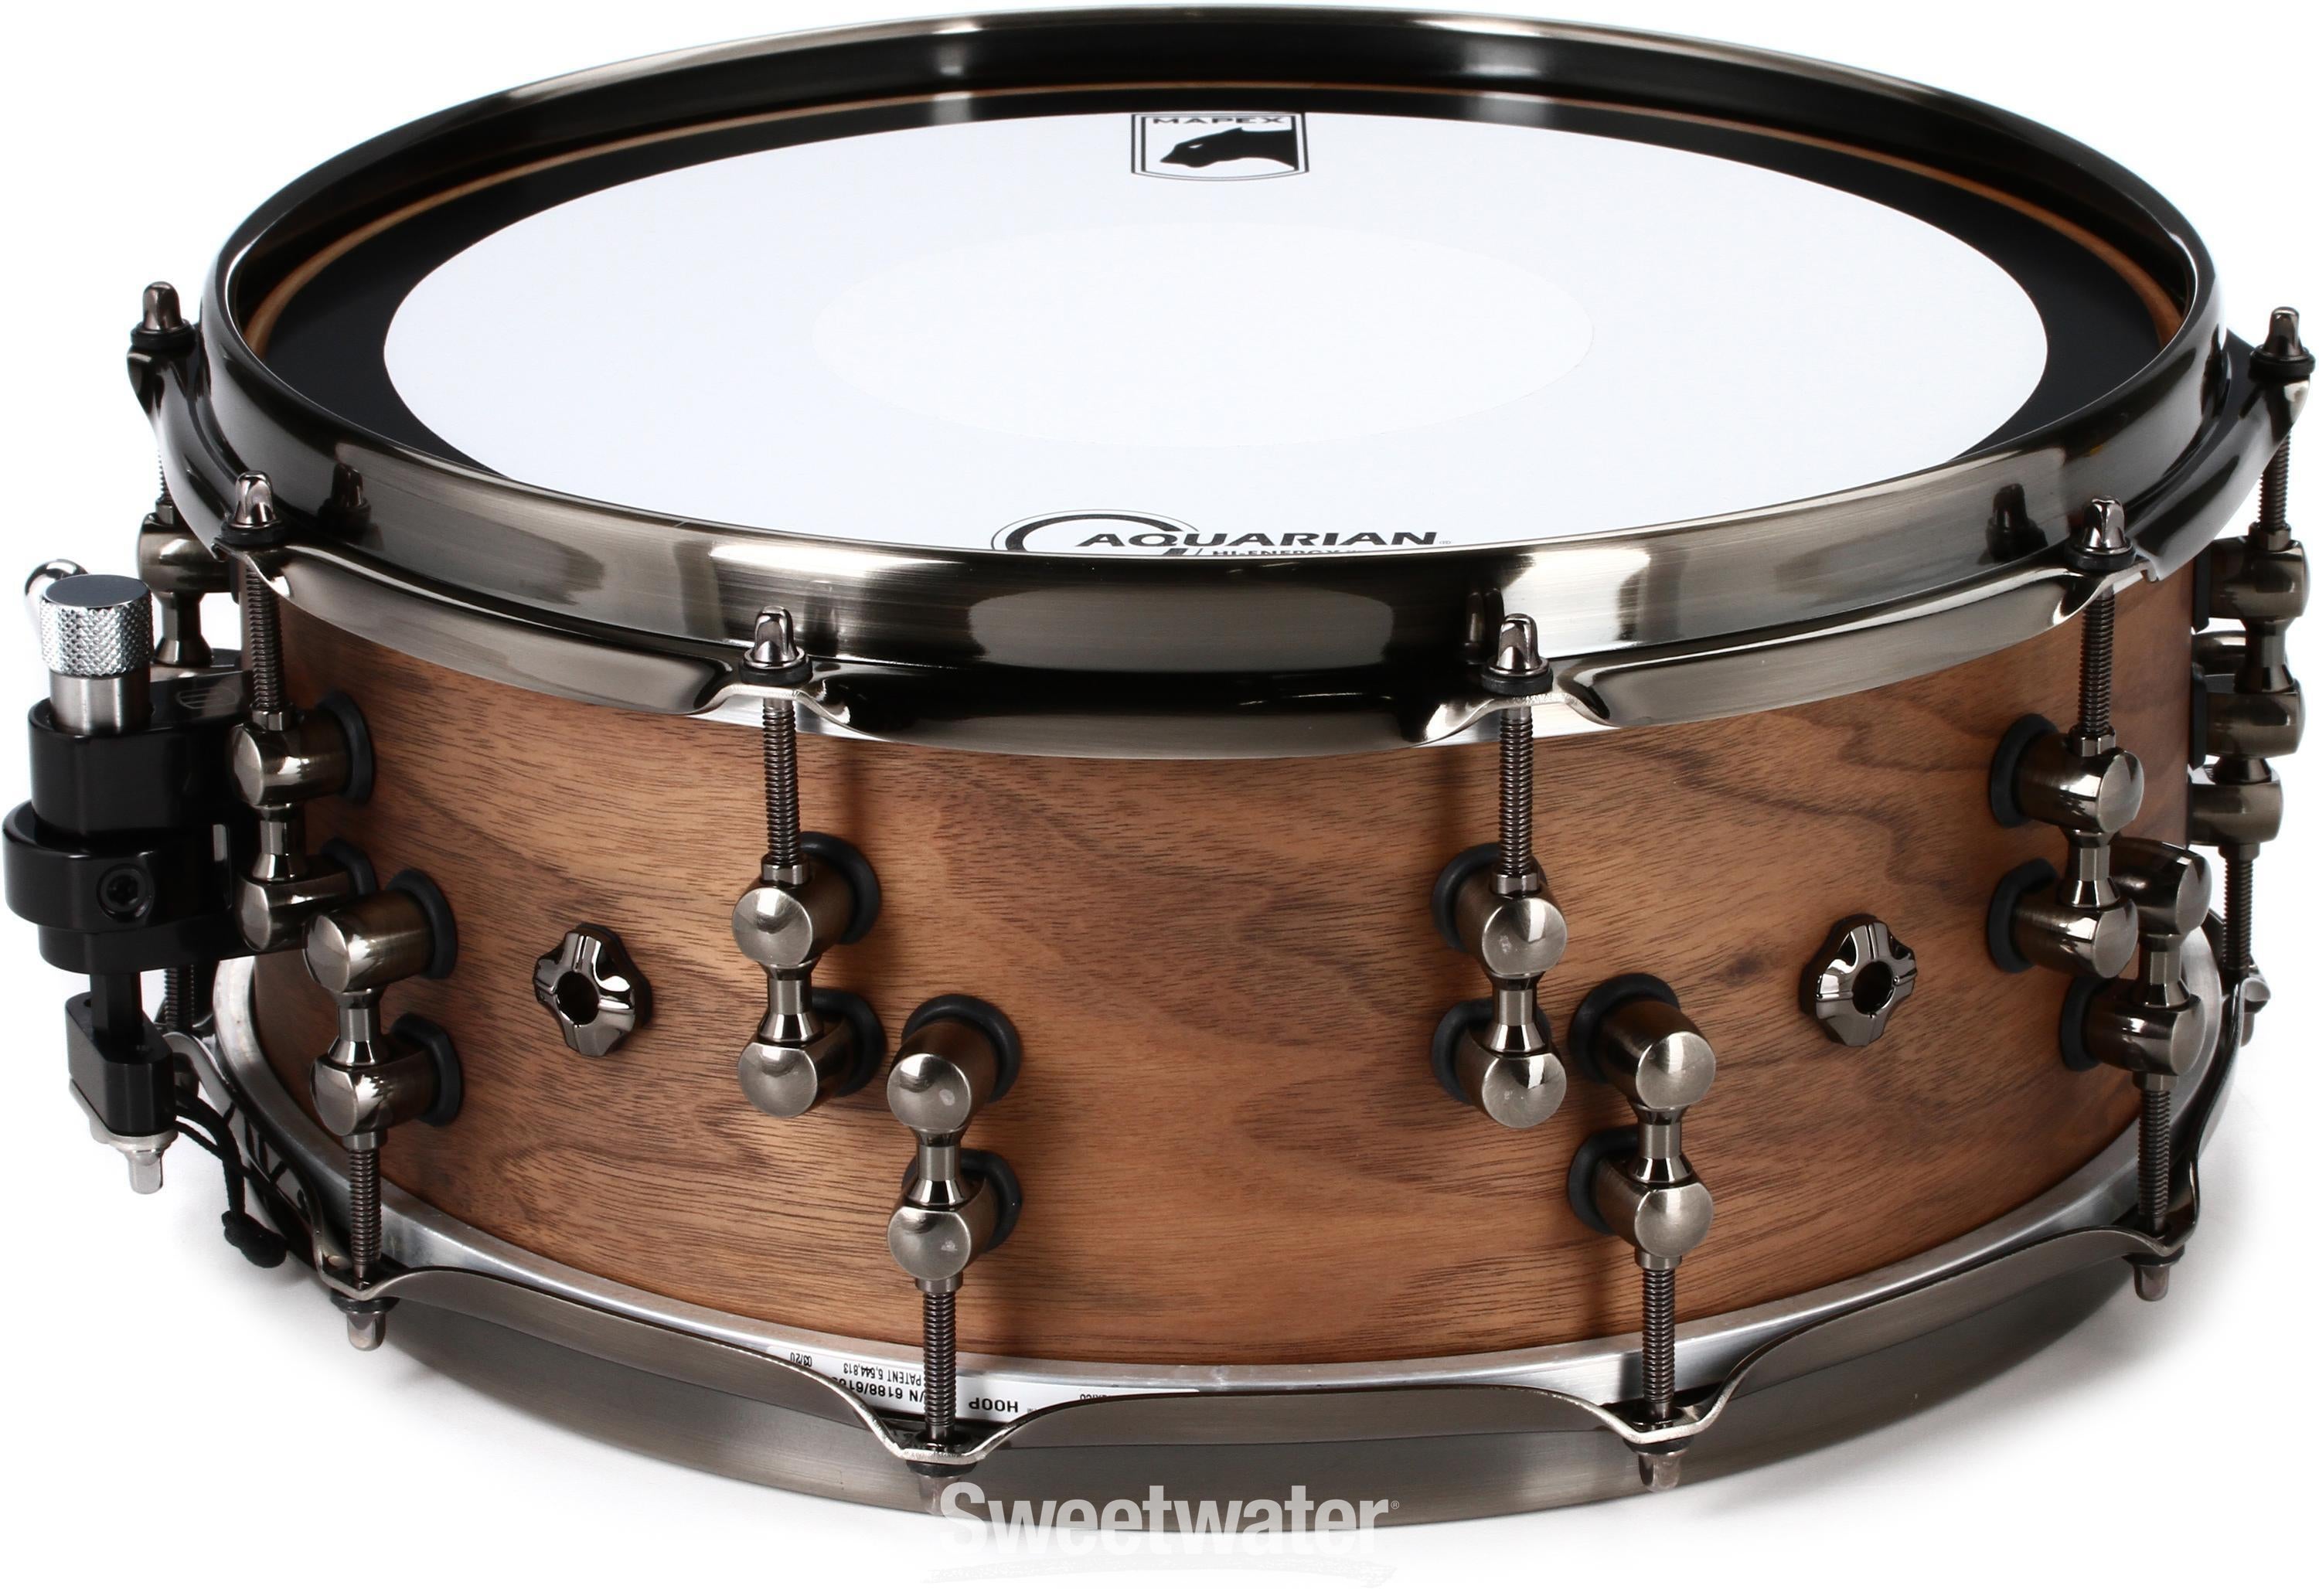 Black Panther Design Lab Machine Snare Drum - 5.5 inch x 14 inch